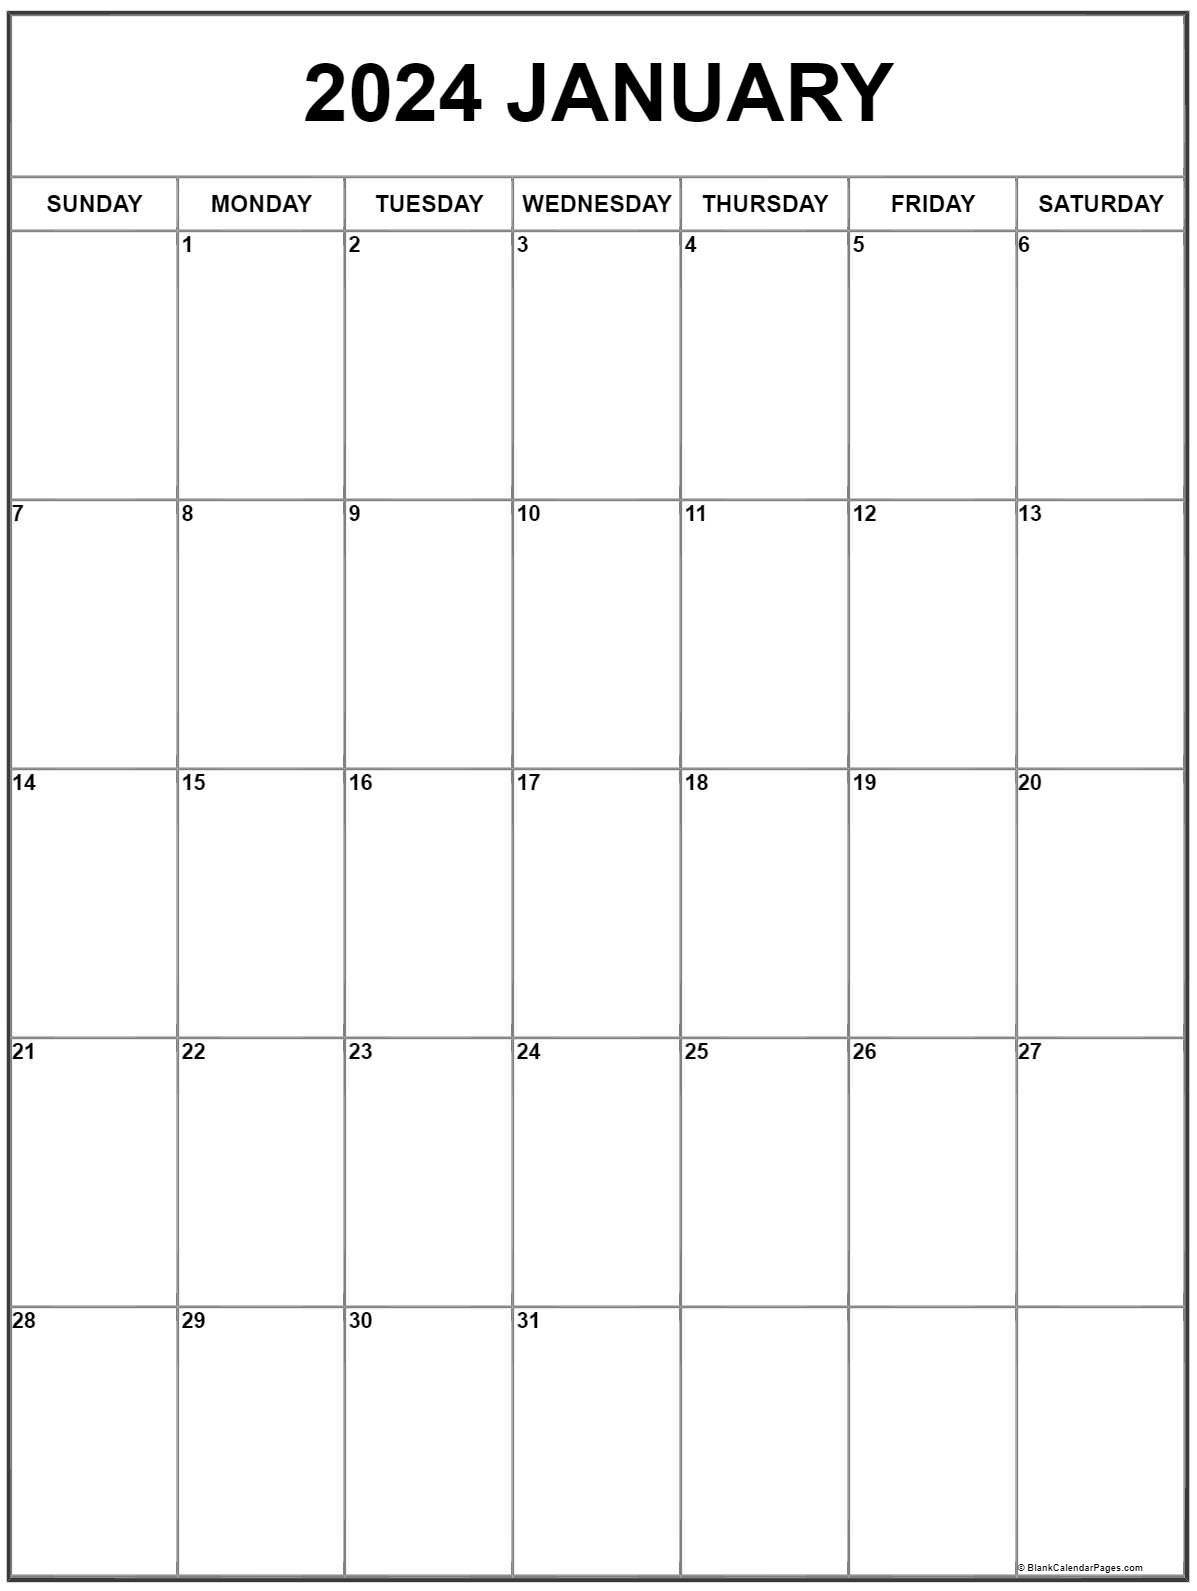 2024 Printable Calendar By Month Vertical Lotti Rhianon - Free Printable 2024 Vertical Calendar With Holidays